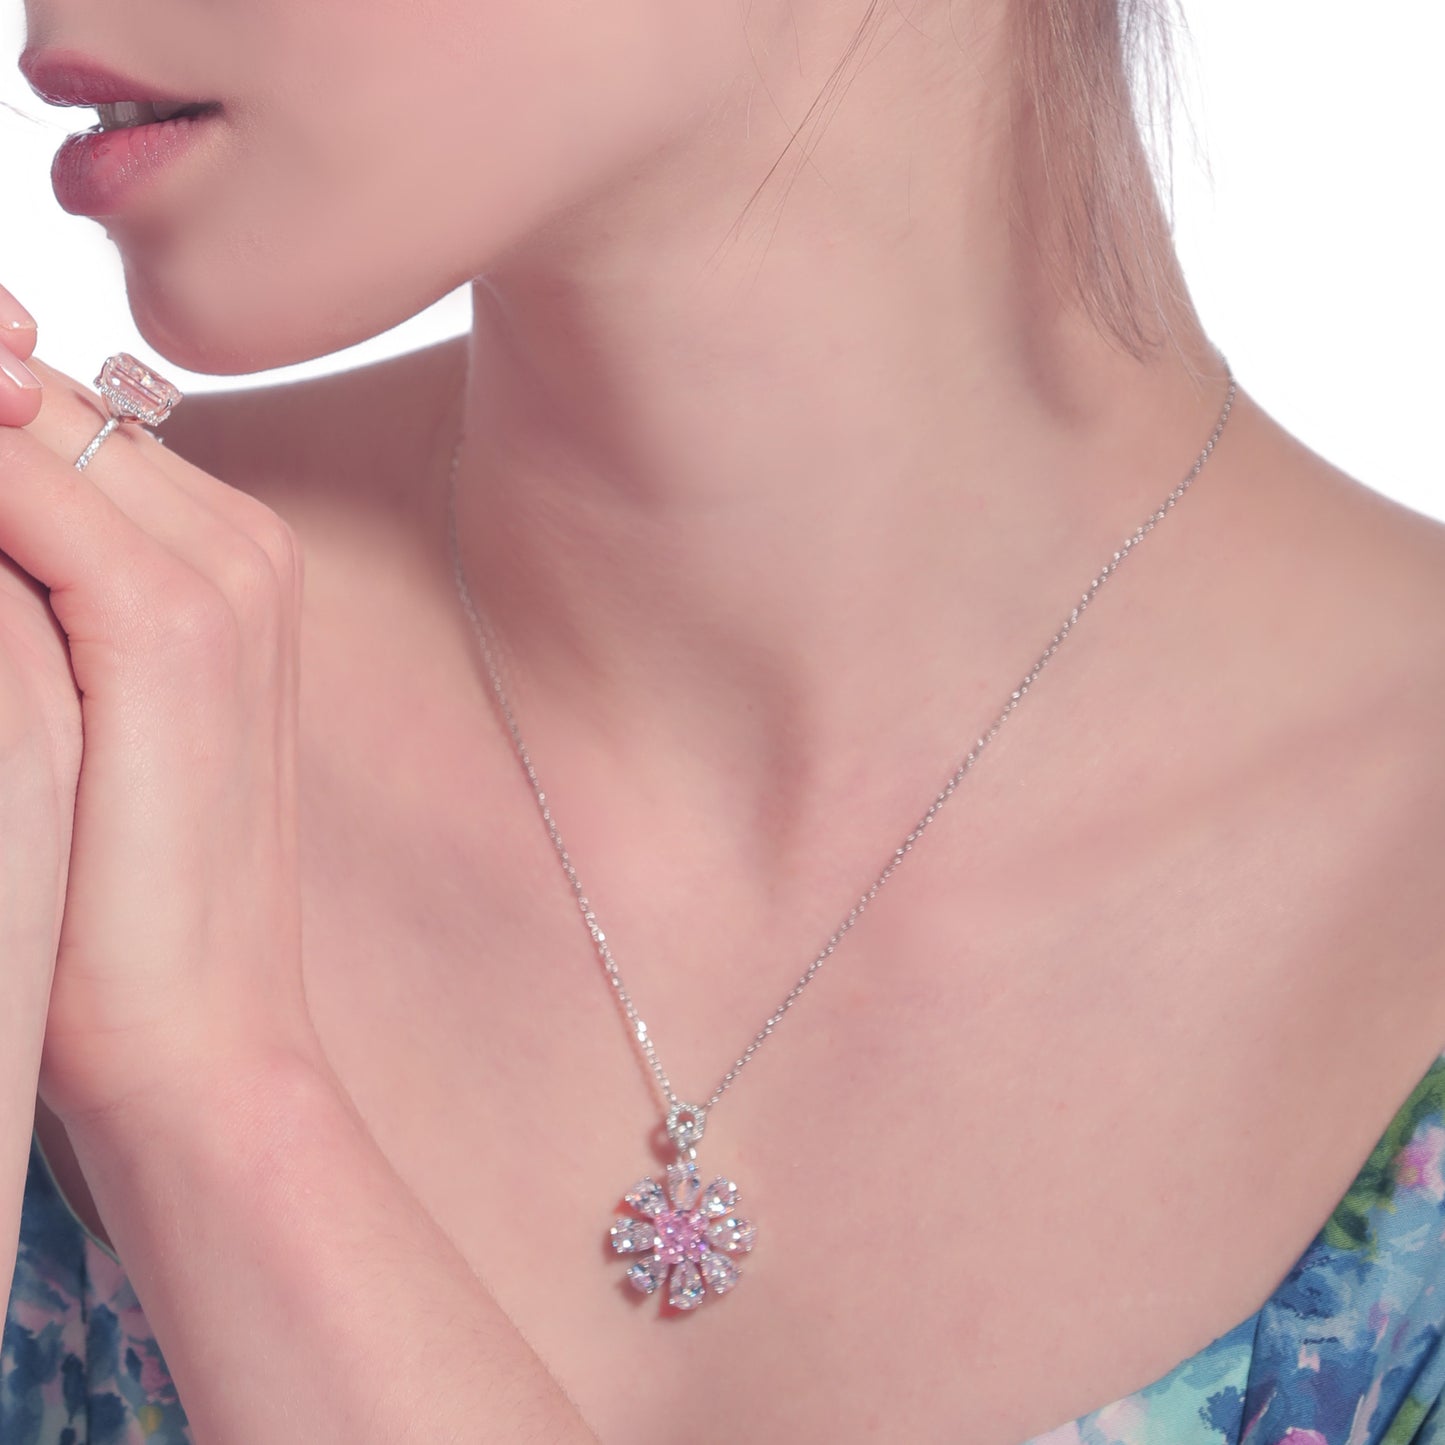 My Darling Brilliant Pink Diamond Sun Necklace